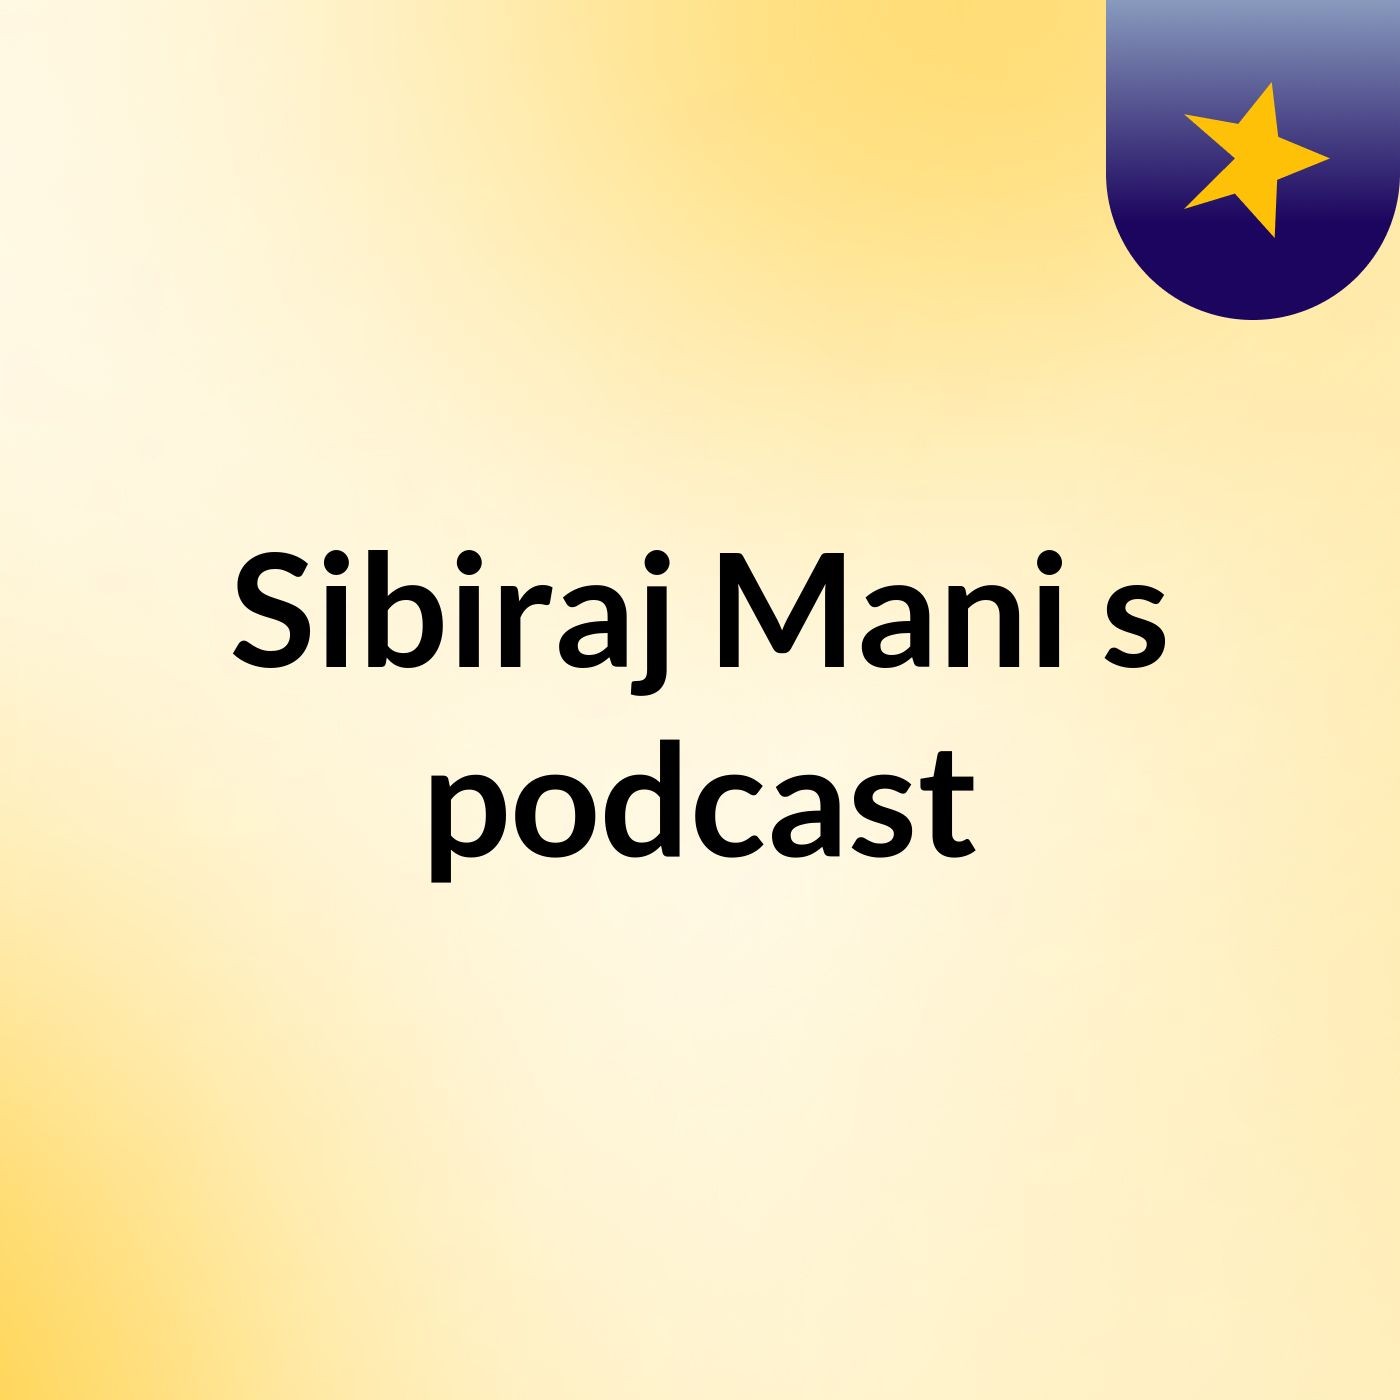 Sibiraj Mani's podcast